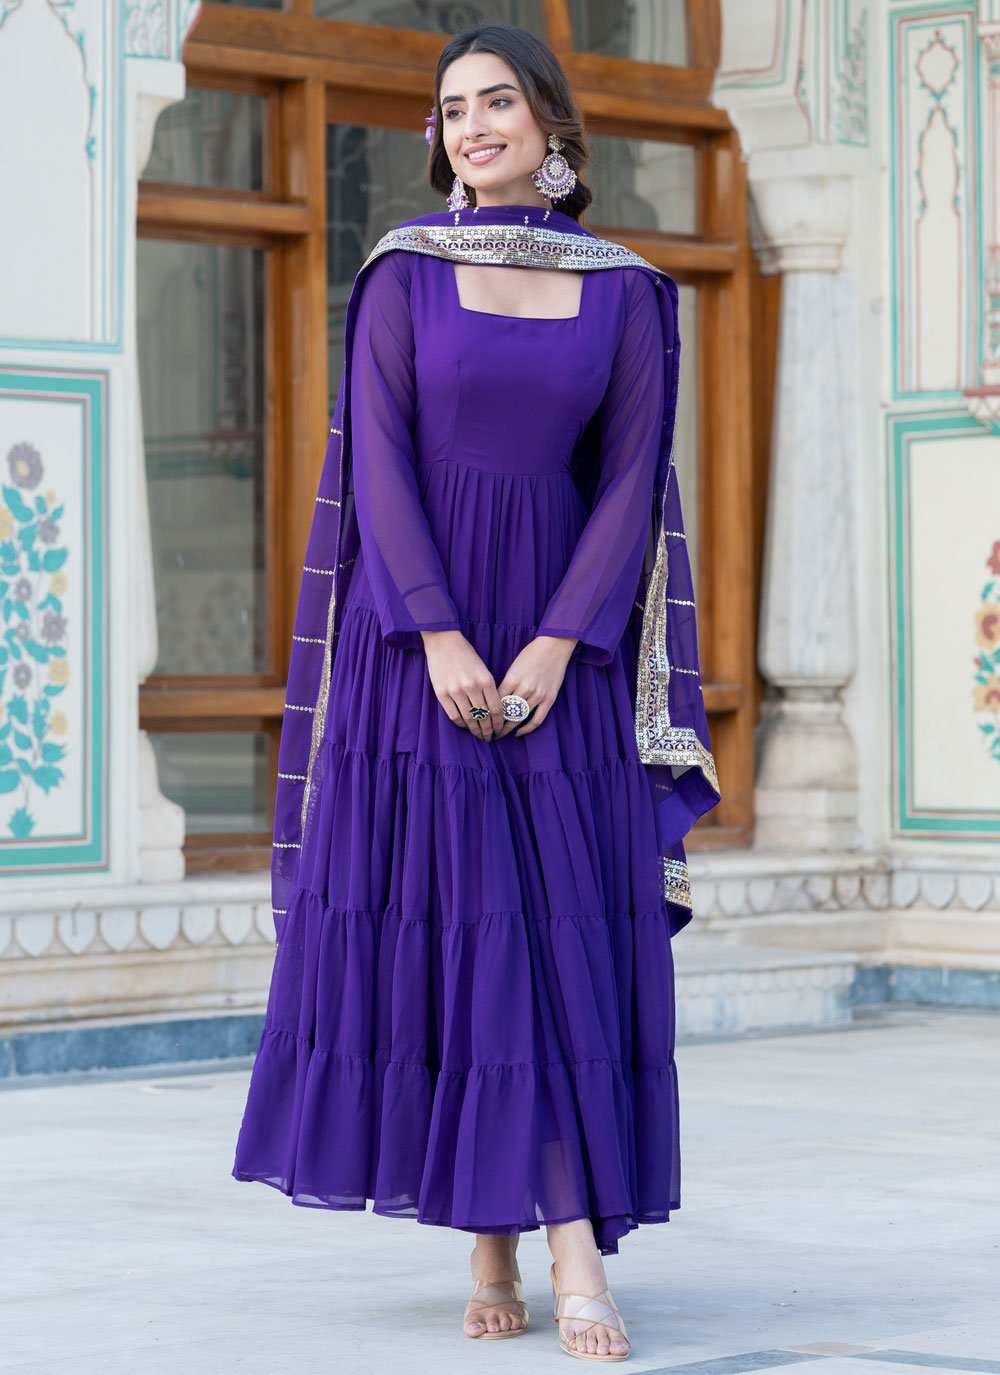 New Light Purple ,Lavender Trendy Color Dress Designing || Summer Dresses  Ideas For Girls. - YouTube